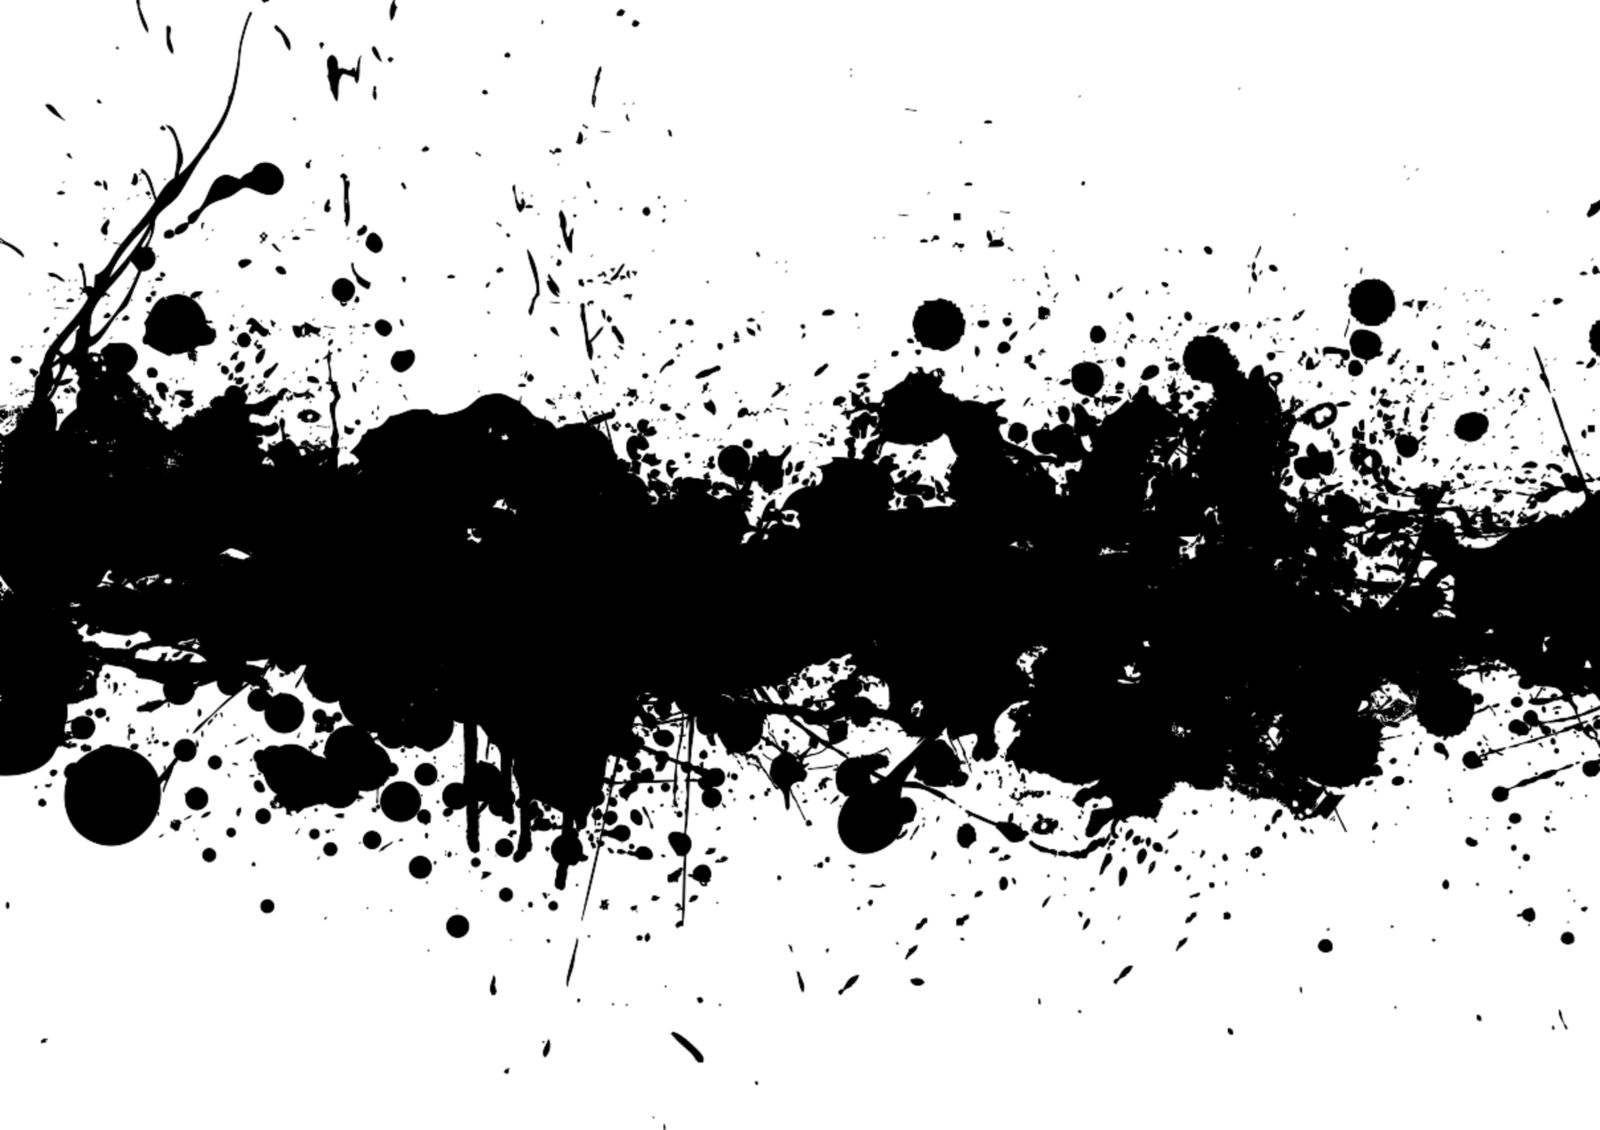 Illustrated Black and white ink splat background